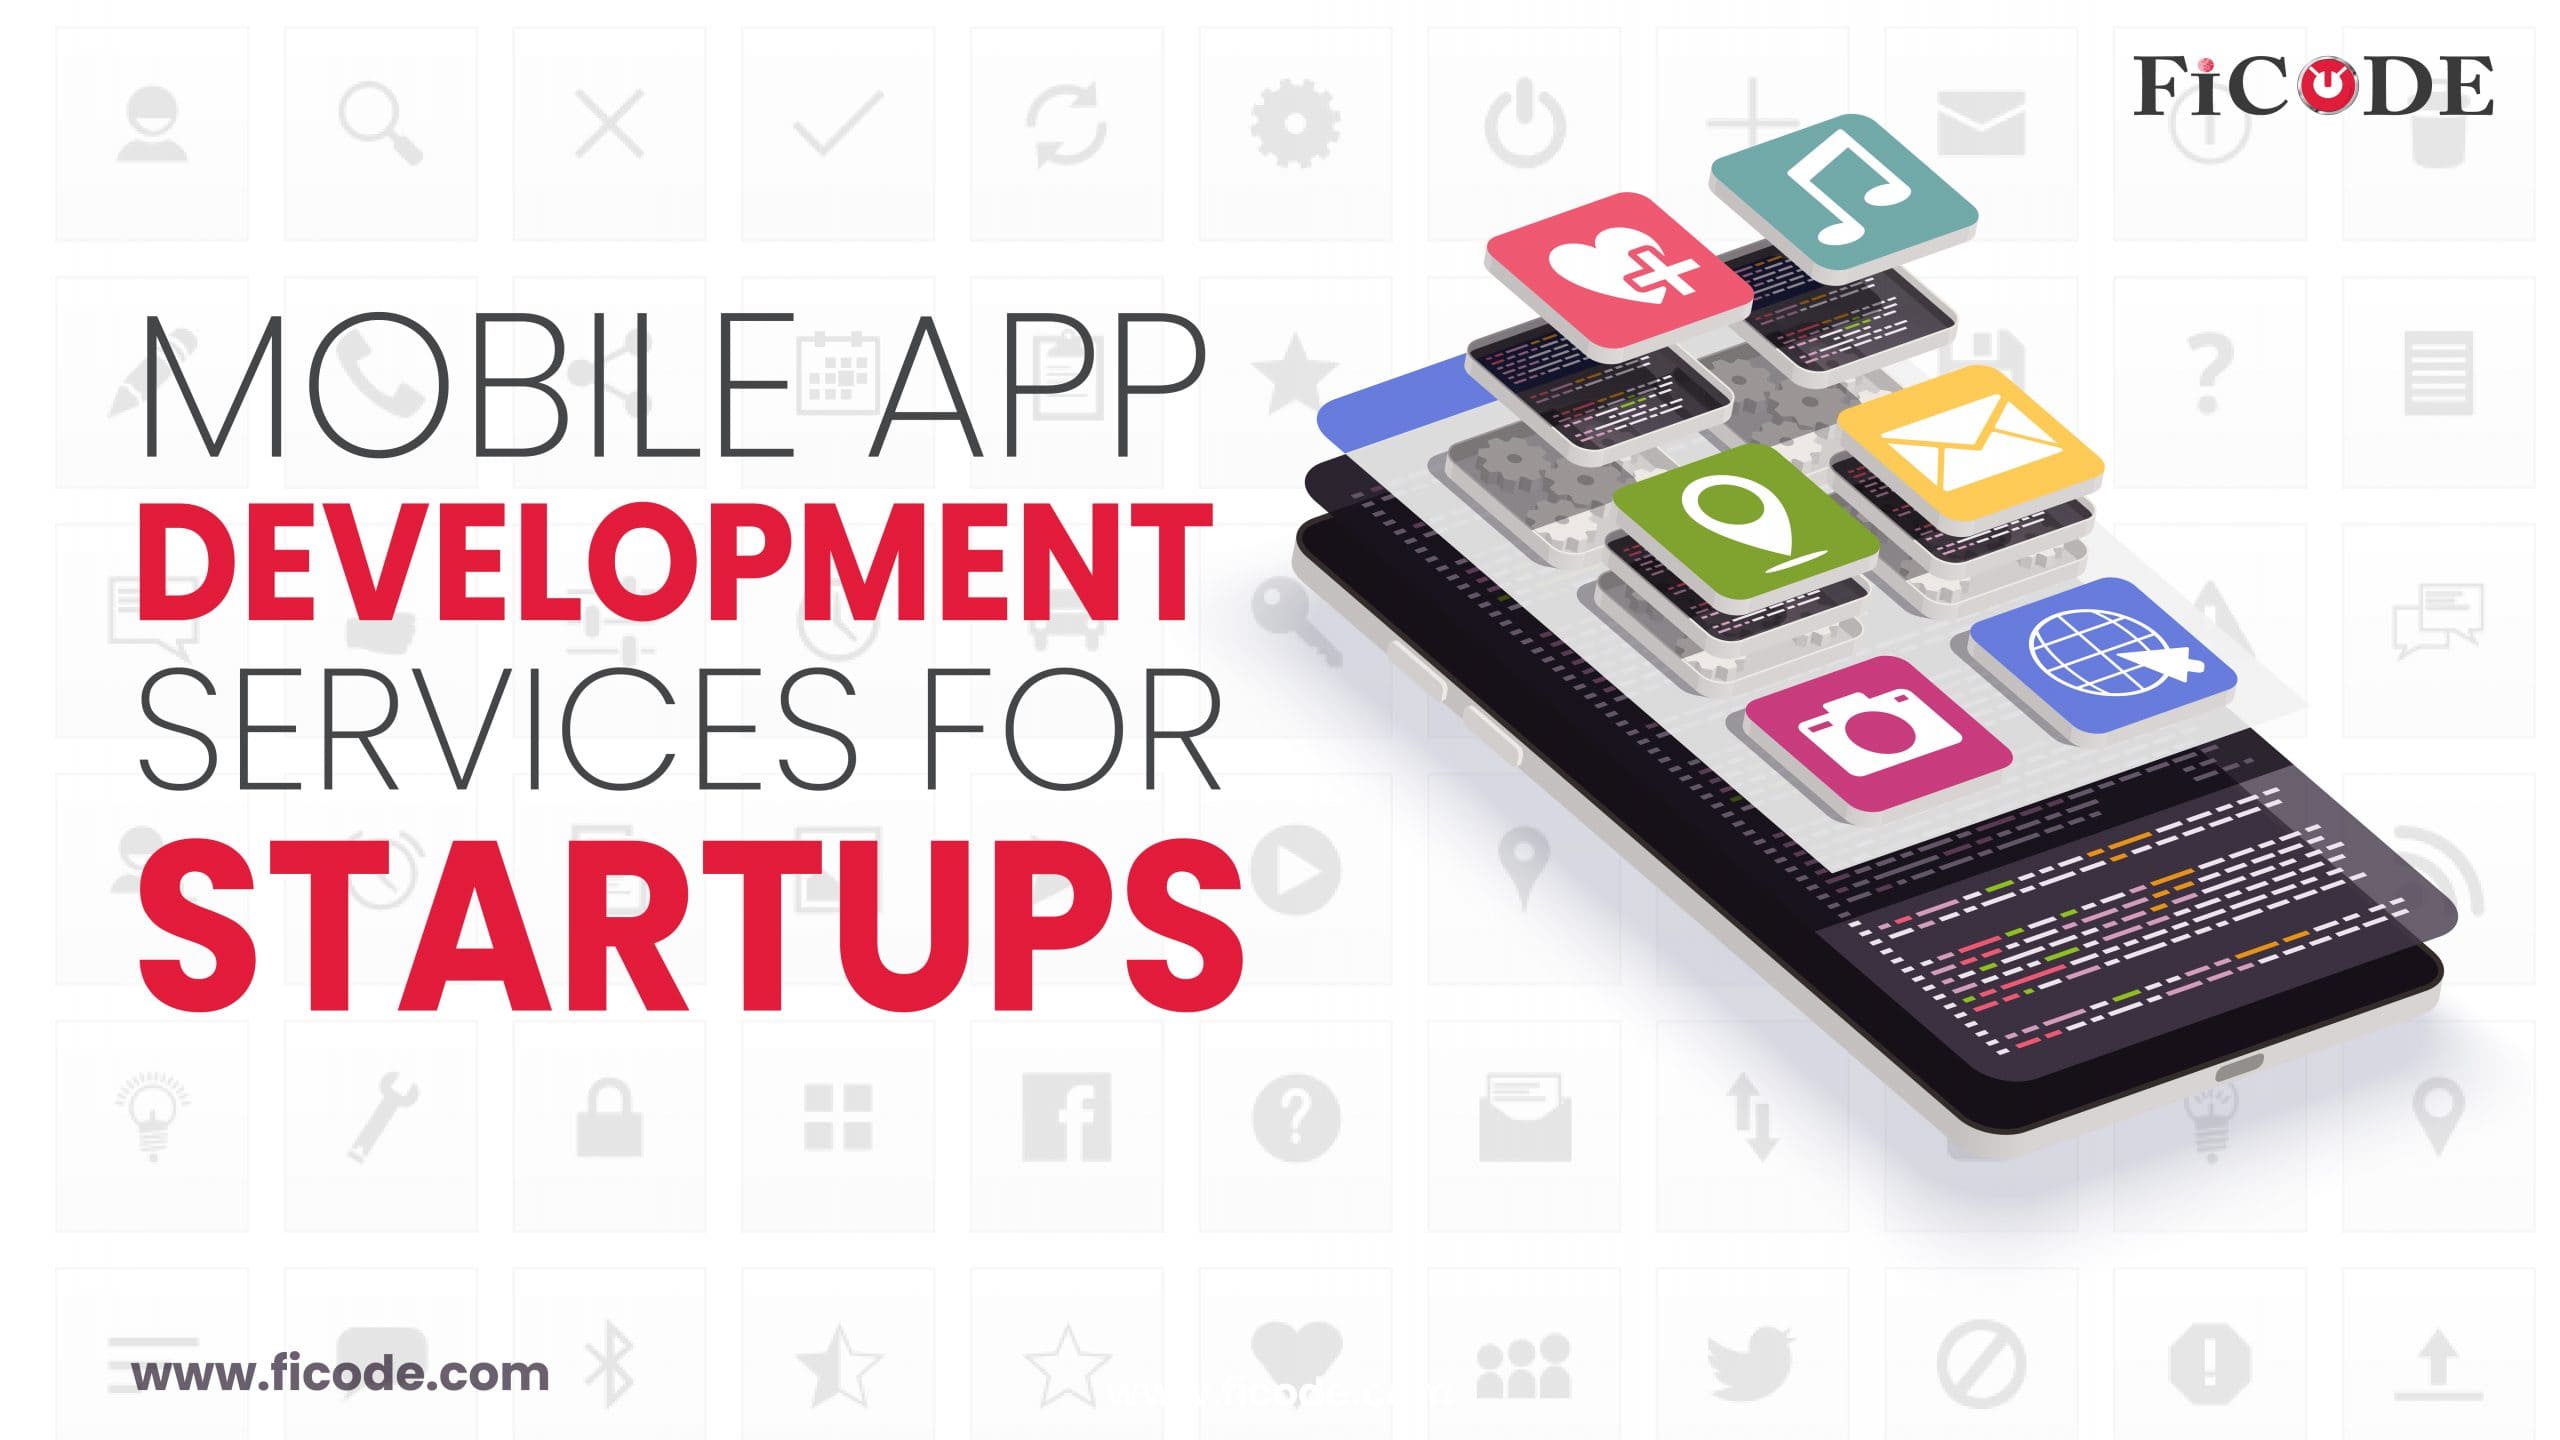 Mobile App Development Services for Startups